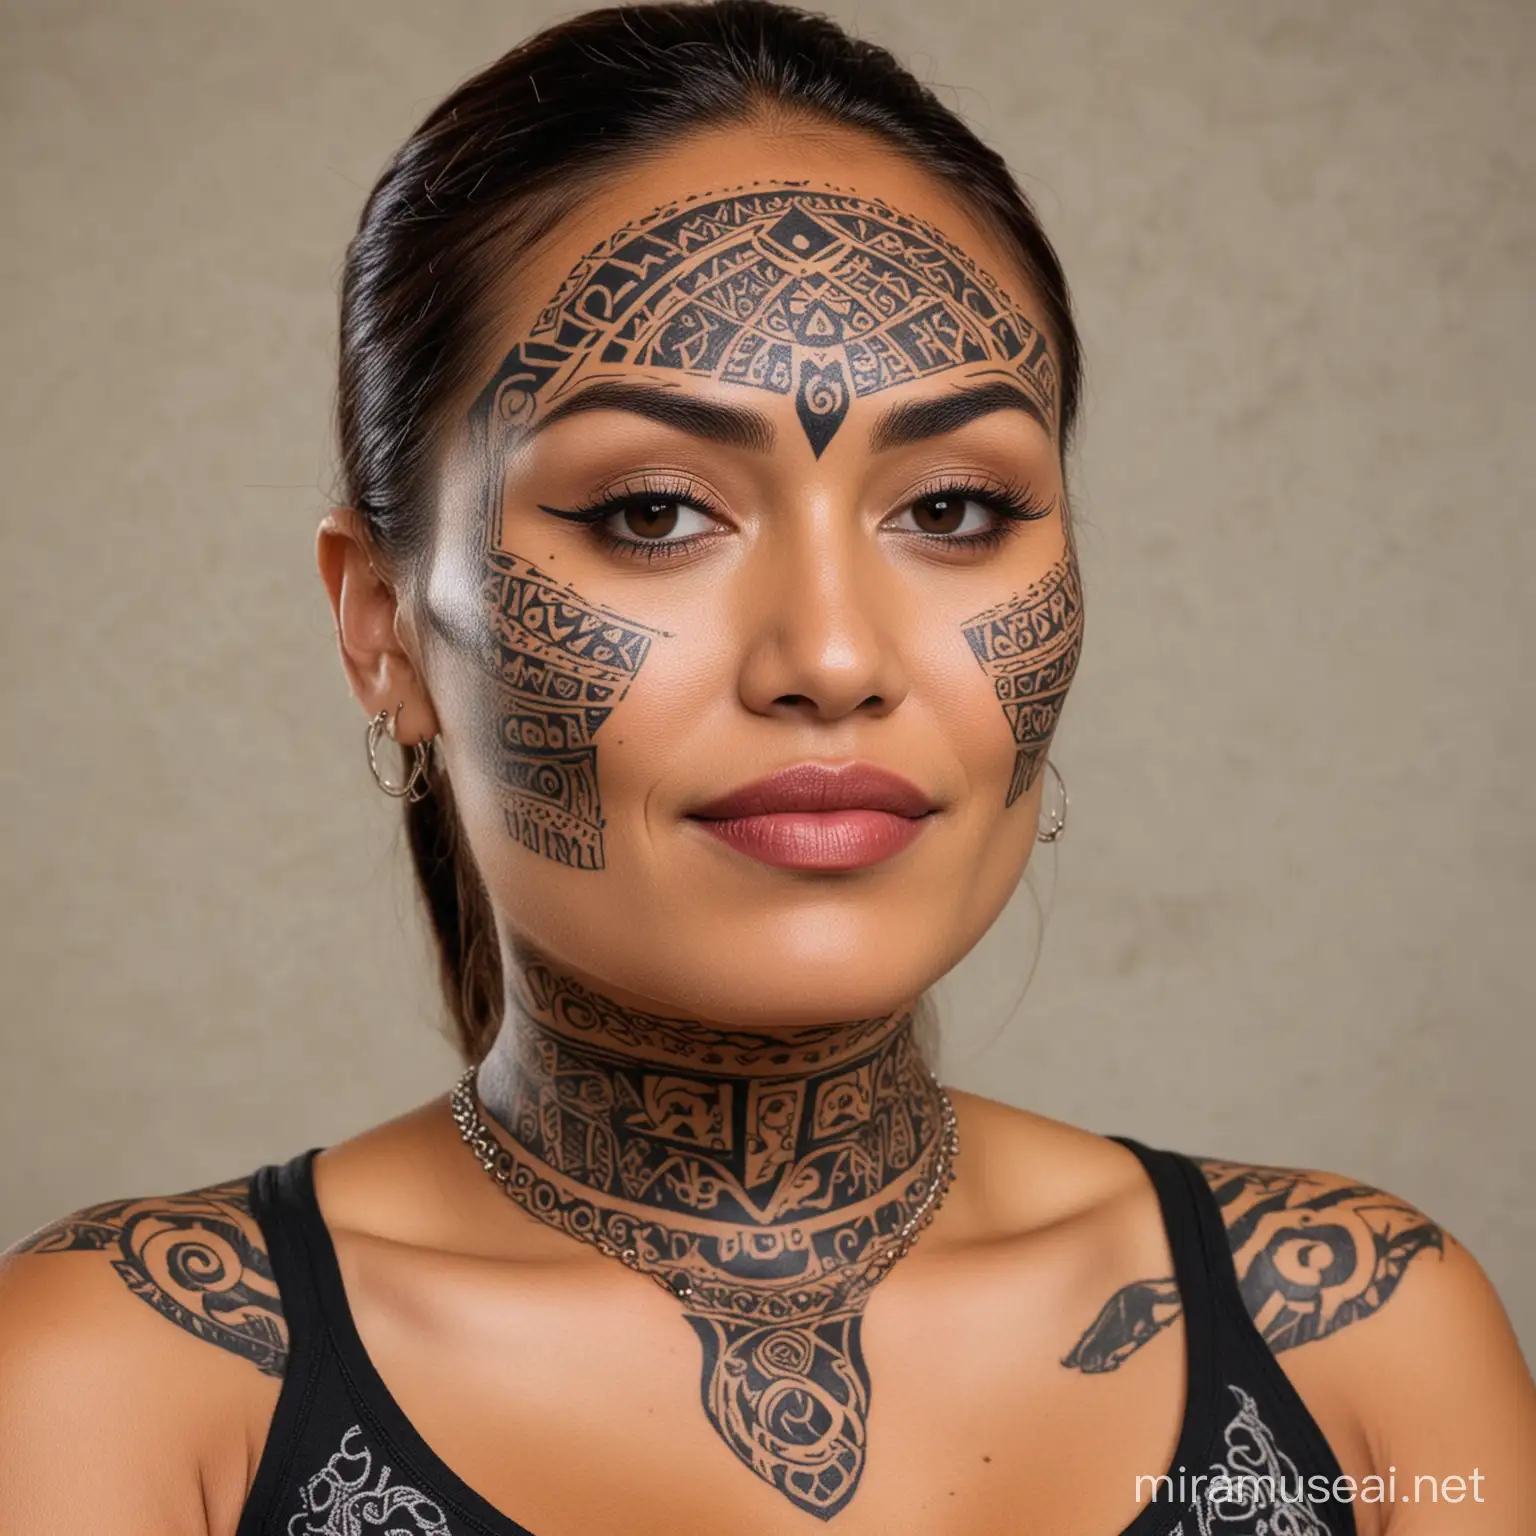 Traditional Maori Woman with Chin Tattoo